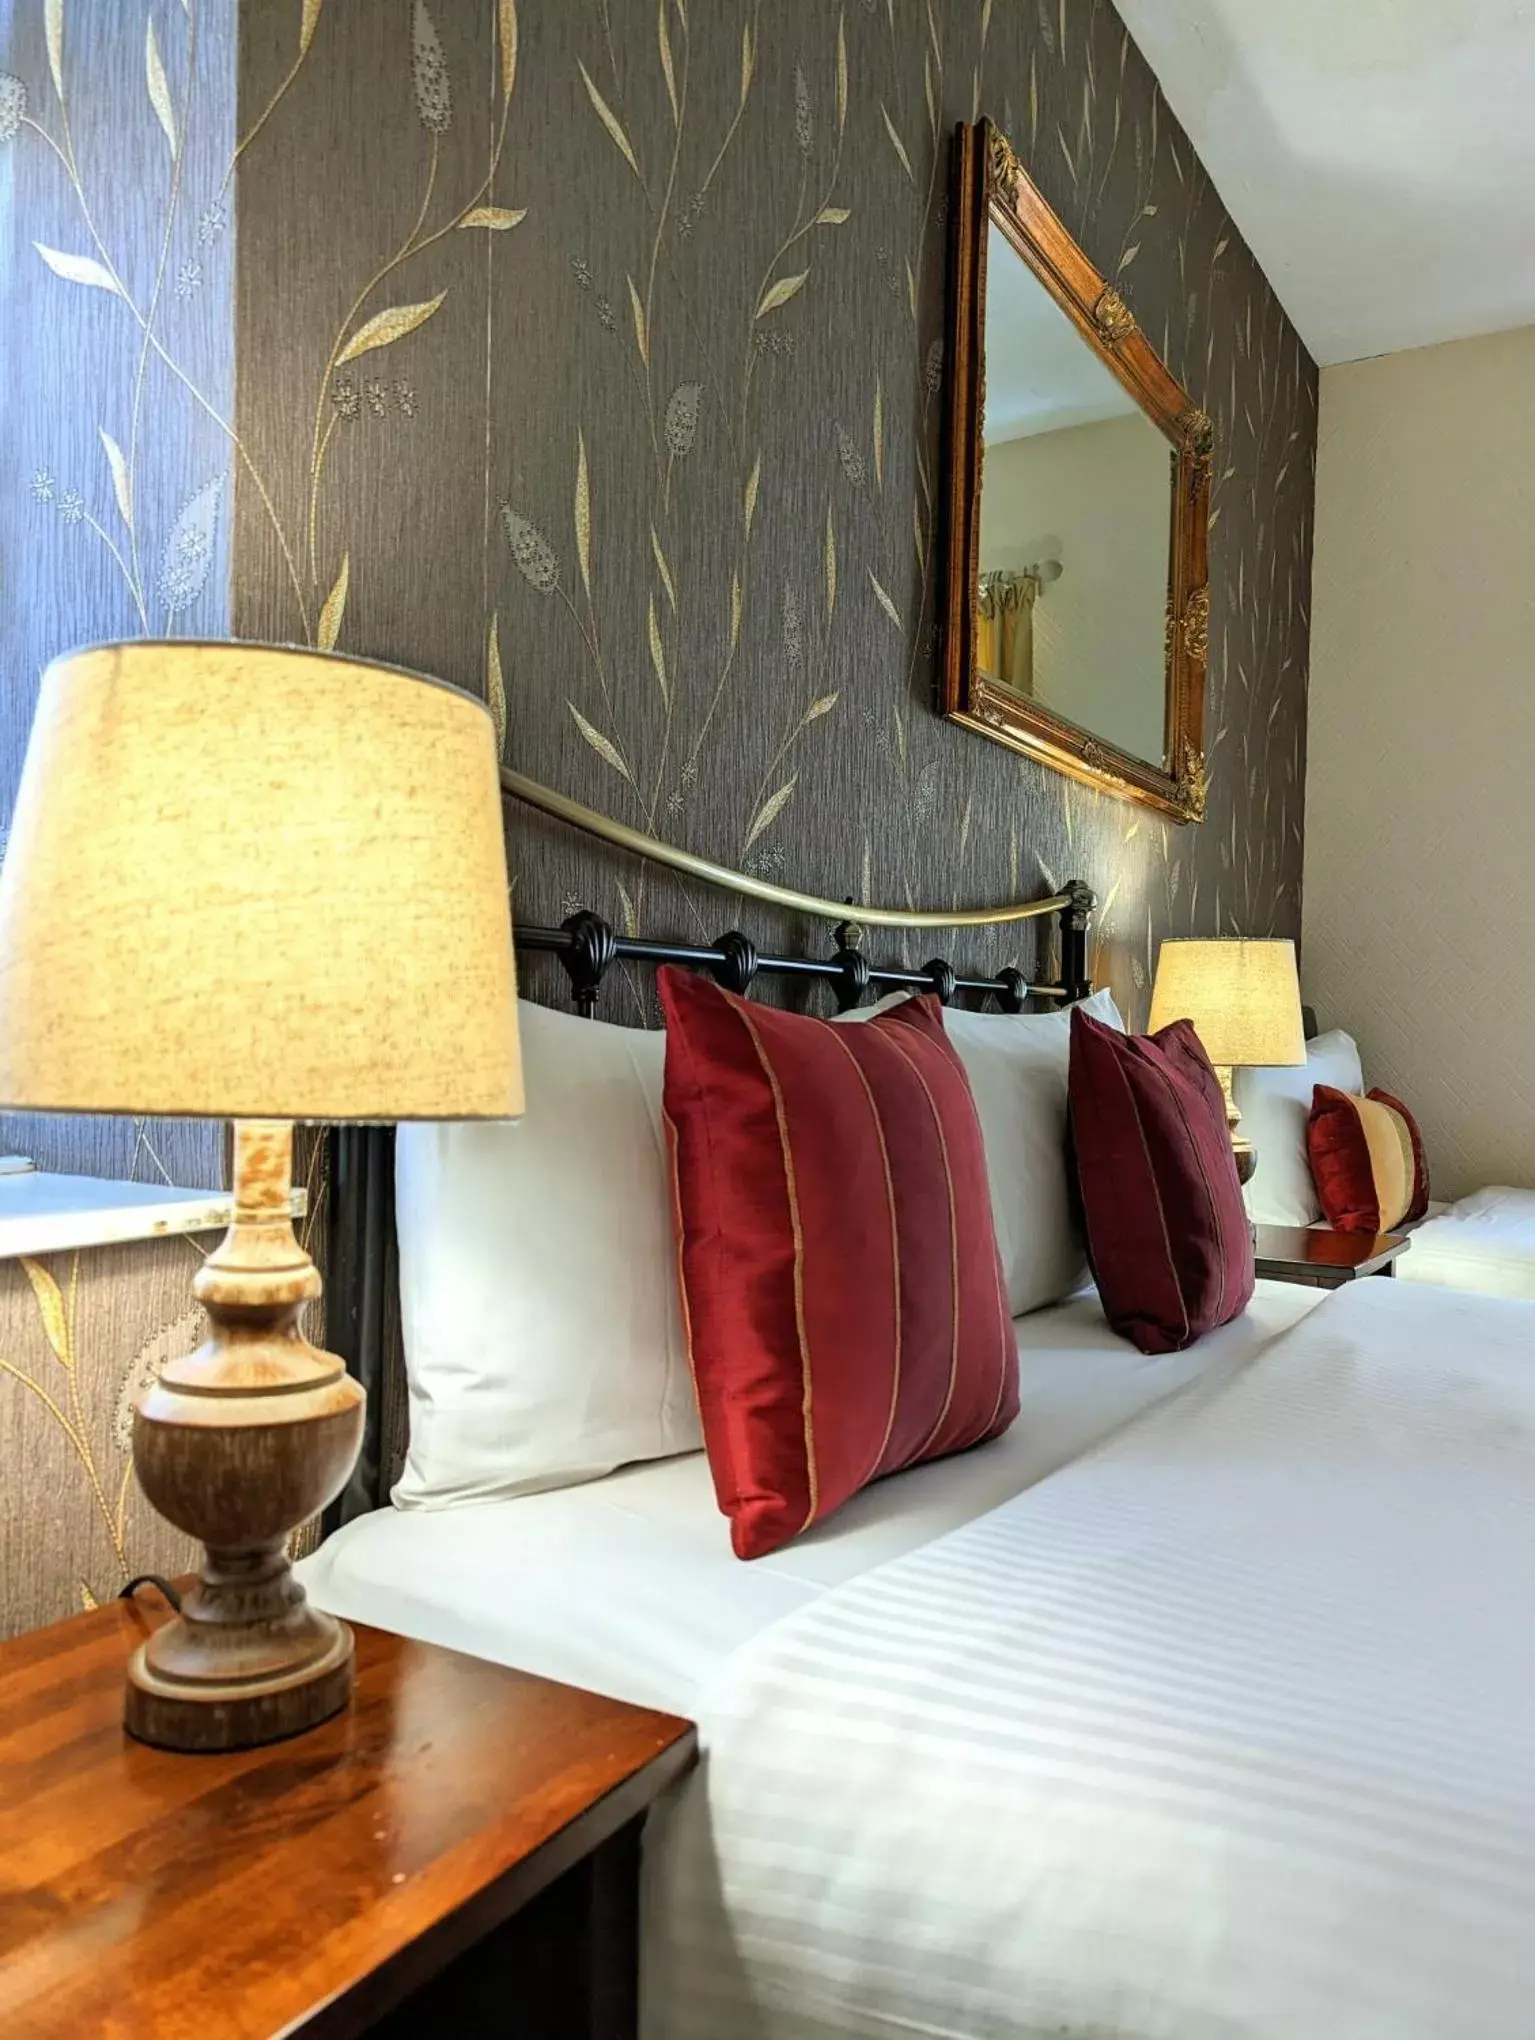 Bed in Brookside Hotel & Restaurant